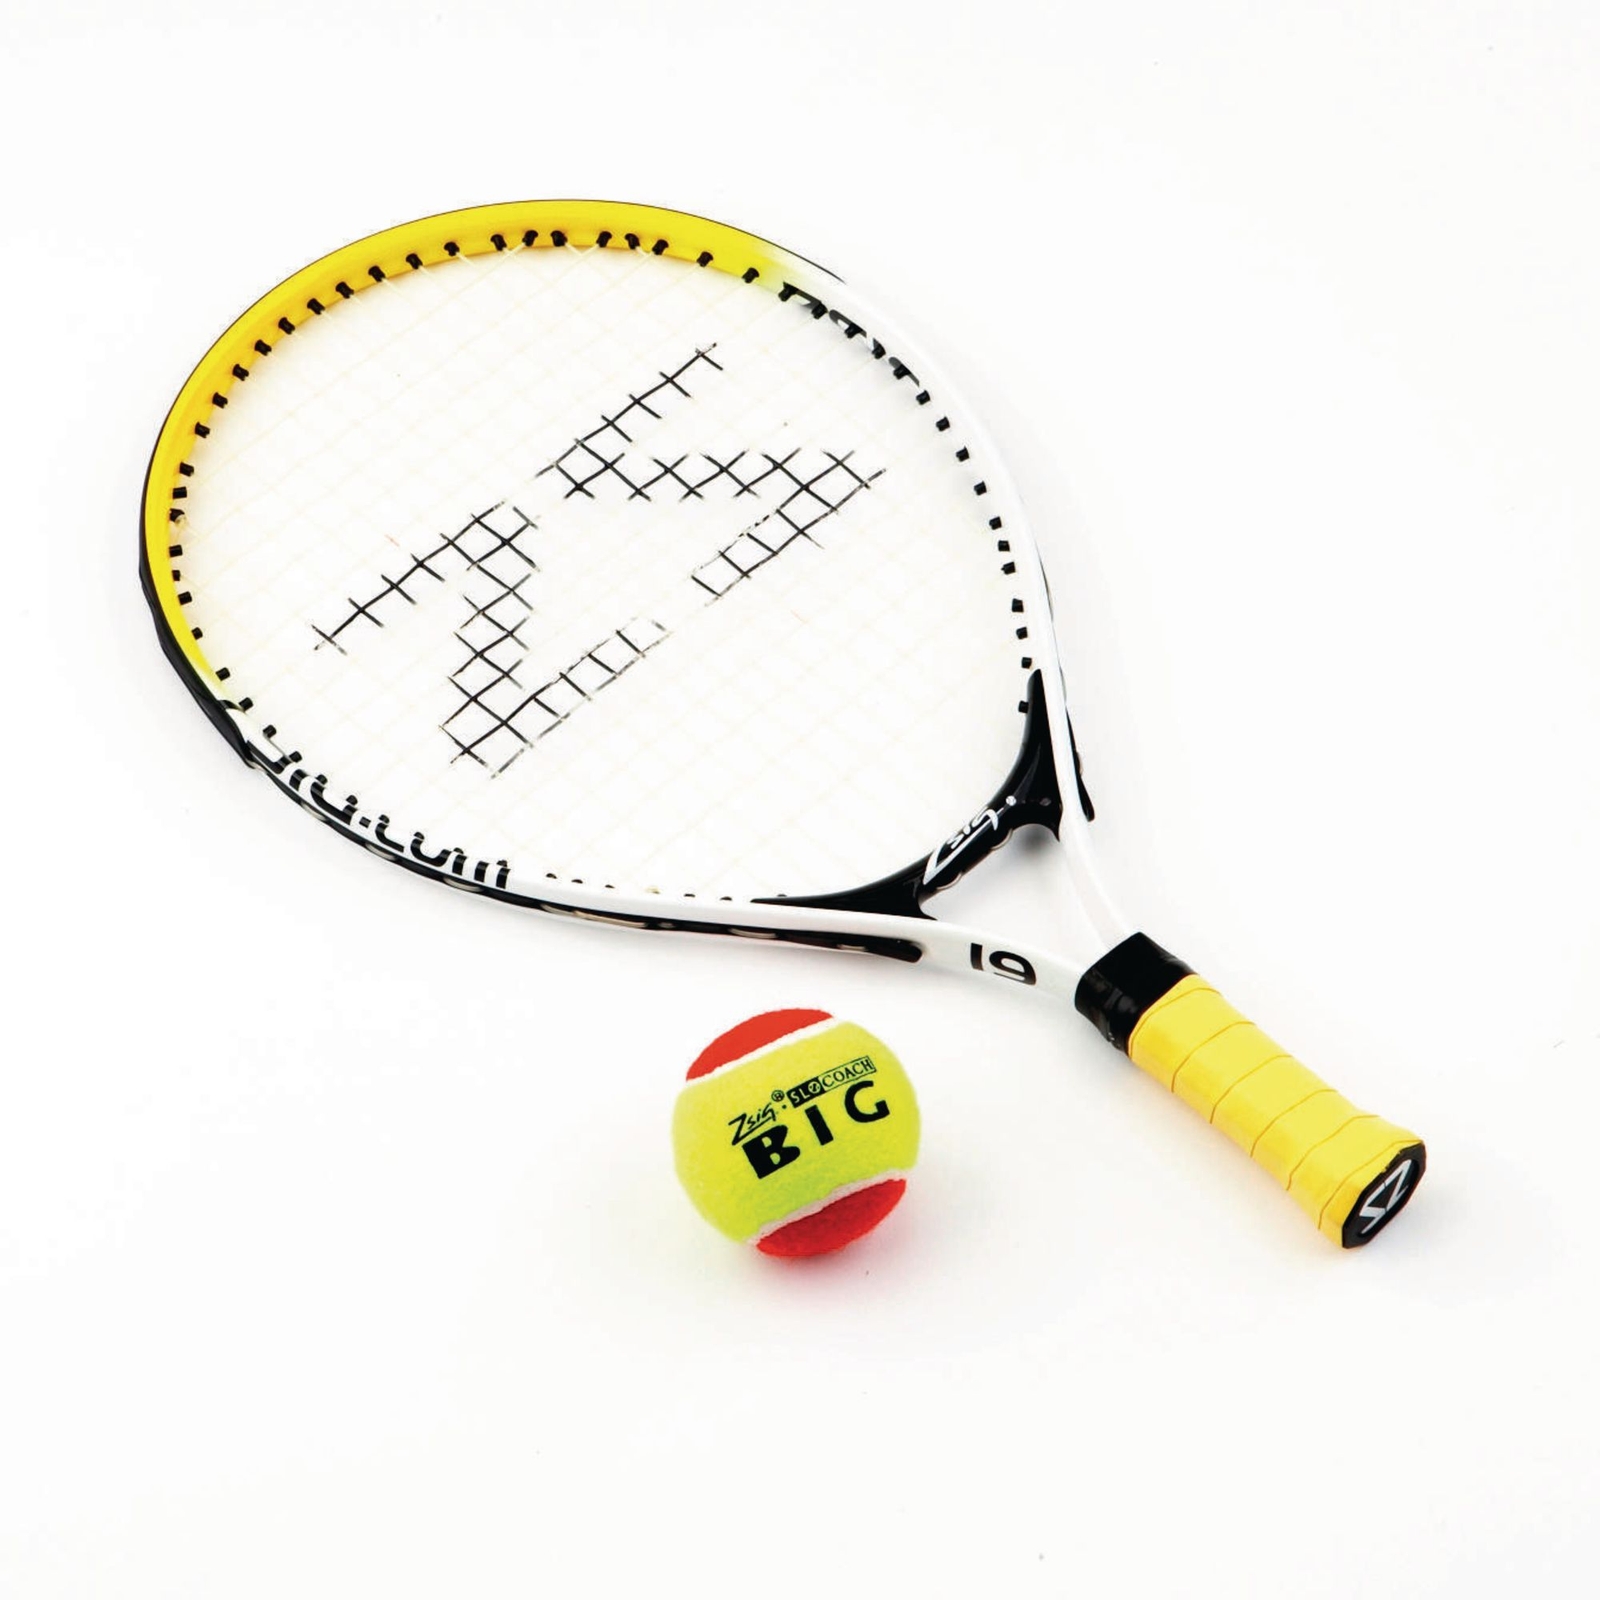 Zsig Yellow Tennis Racket - 19in" - Each